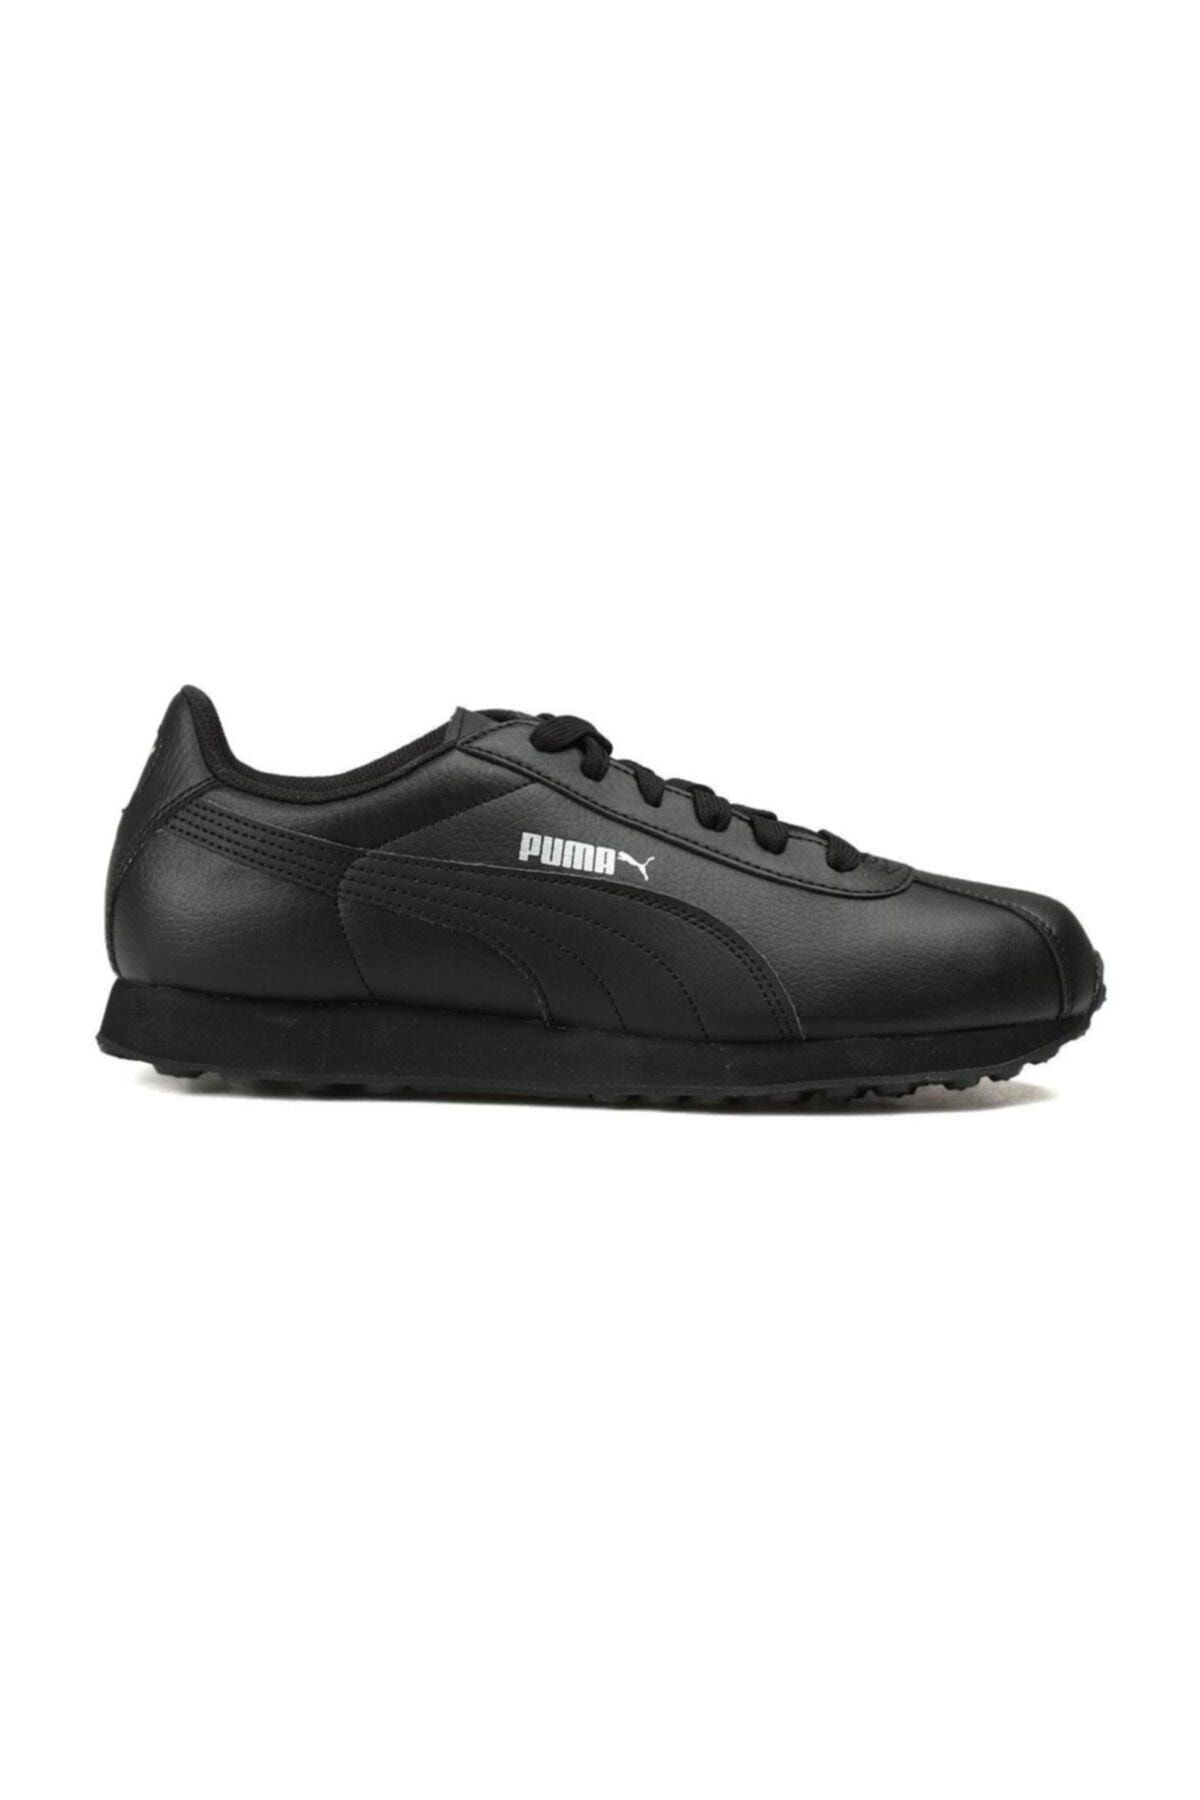 Puma TURIN Siyah Unisex Sneaker 100233020